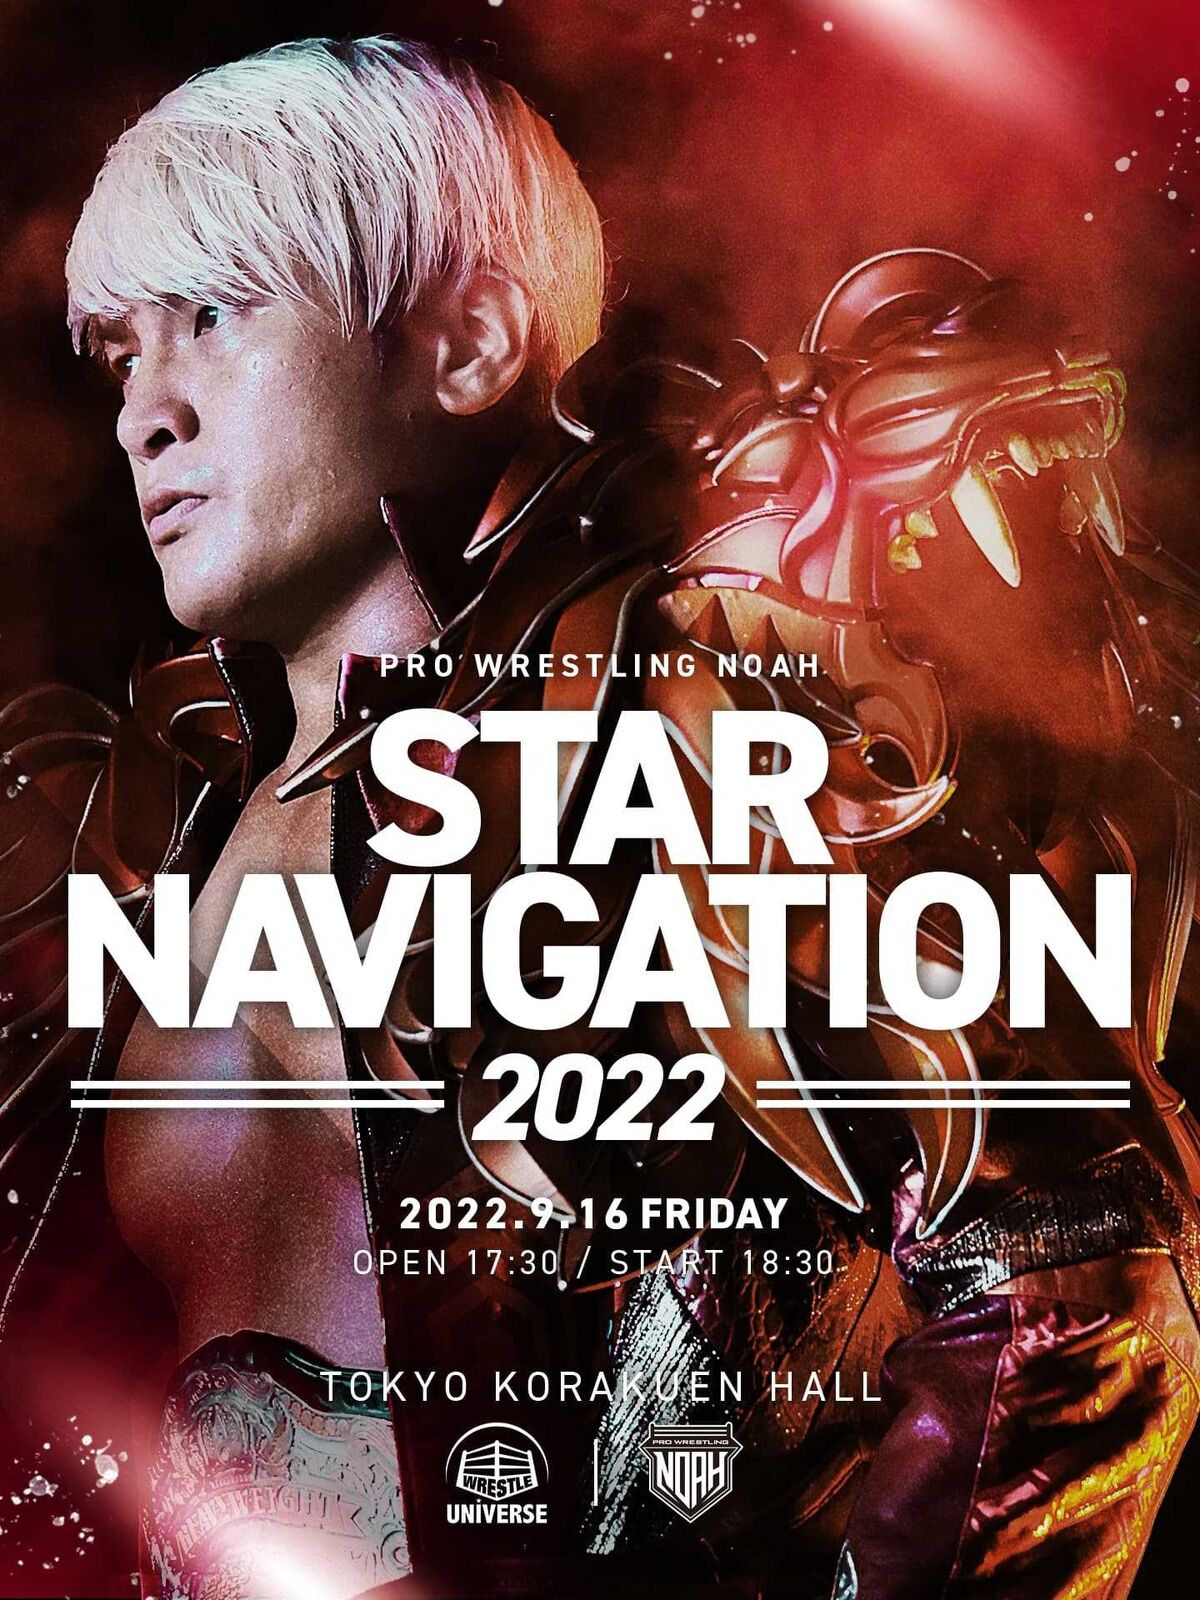 NOAH Star Navigation (September 16, 2022) Pro Wrestling Fandom